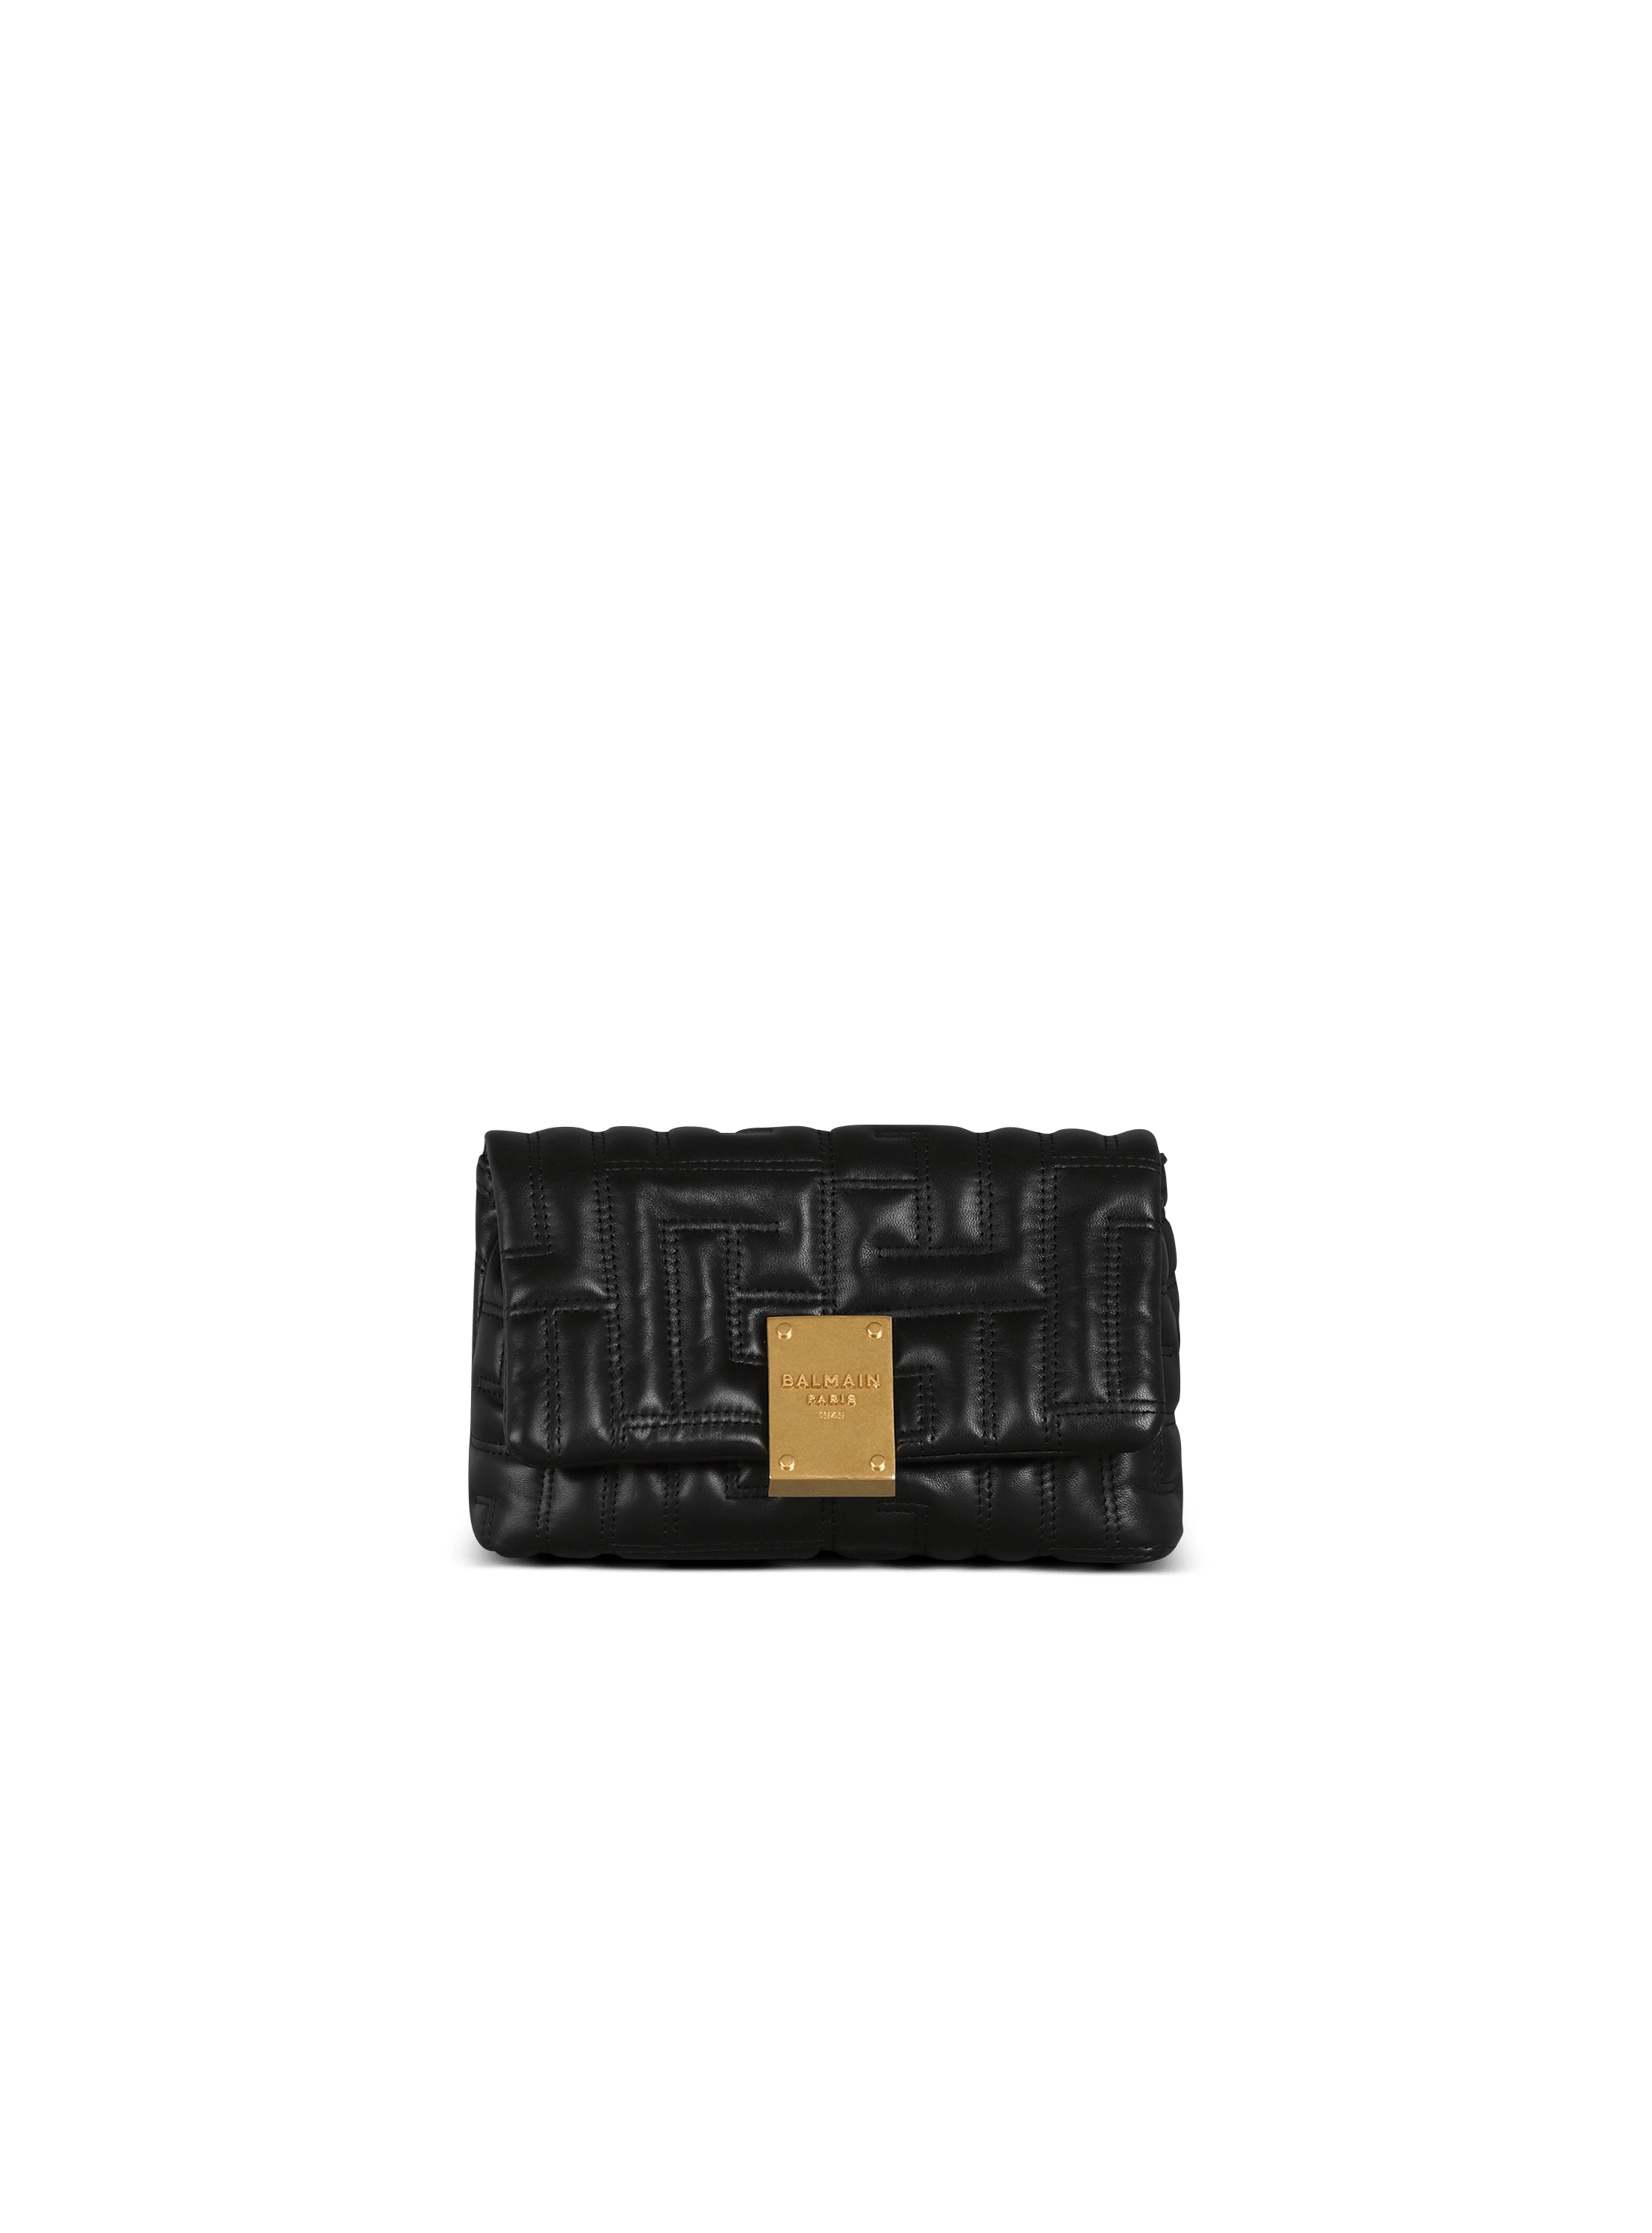 Louis Vuitton Embossed Monogram Leather Mini Skirt BLACK. Size 34